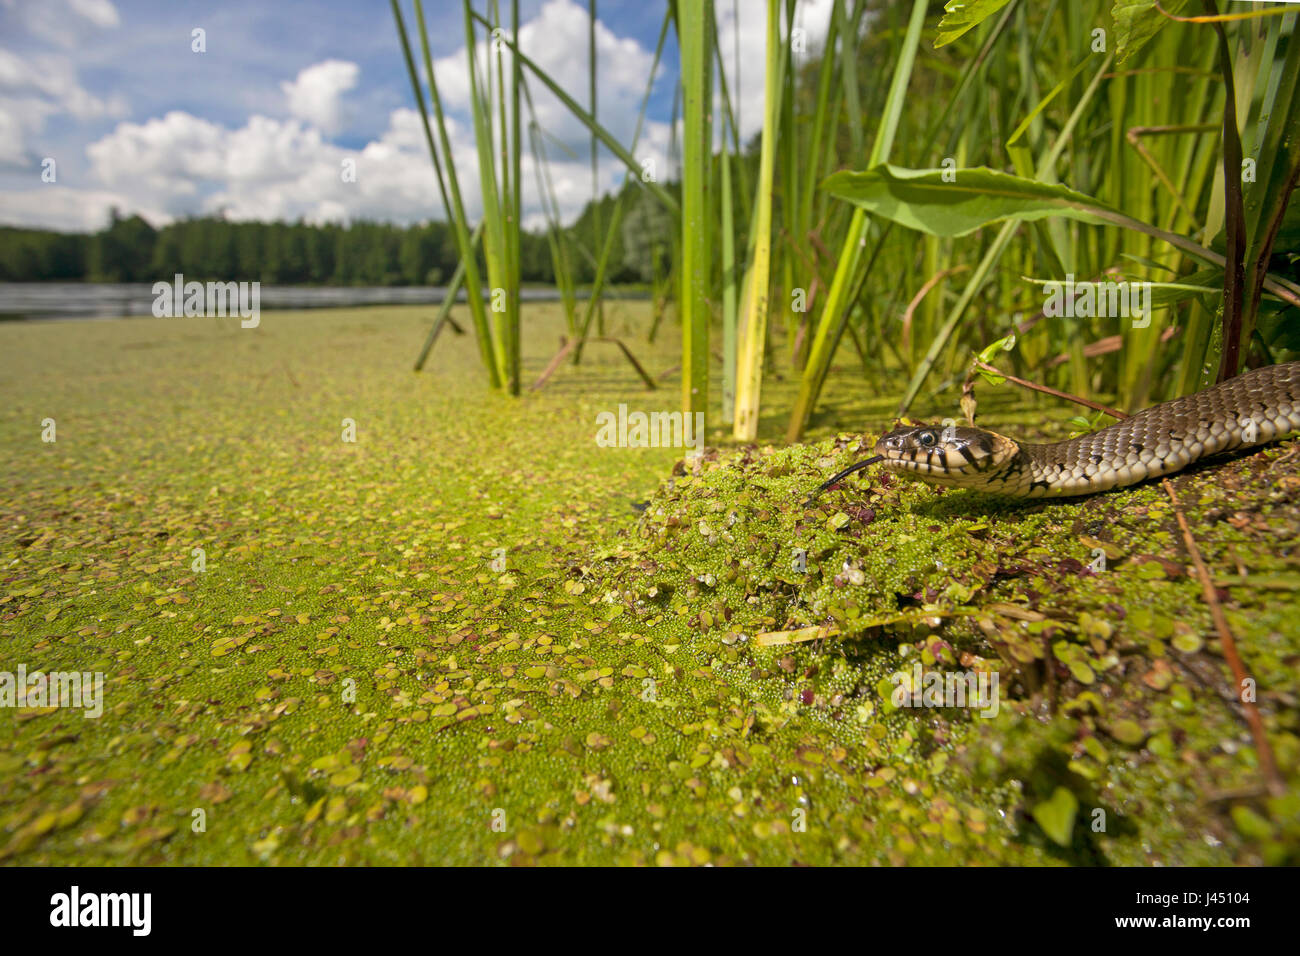 adult grass snake in habitat Stock Photo